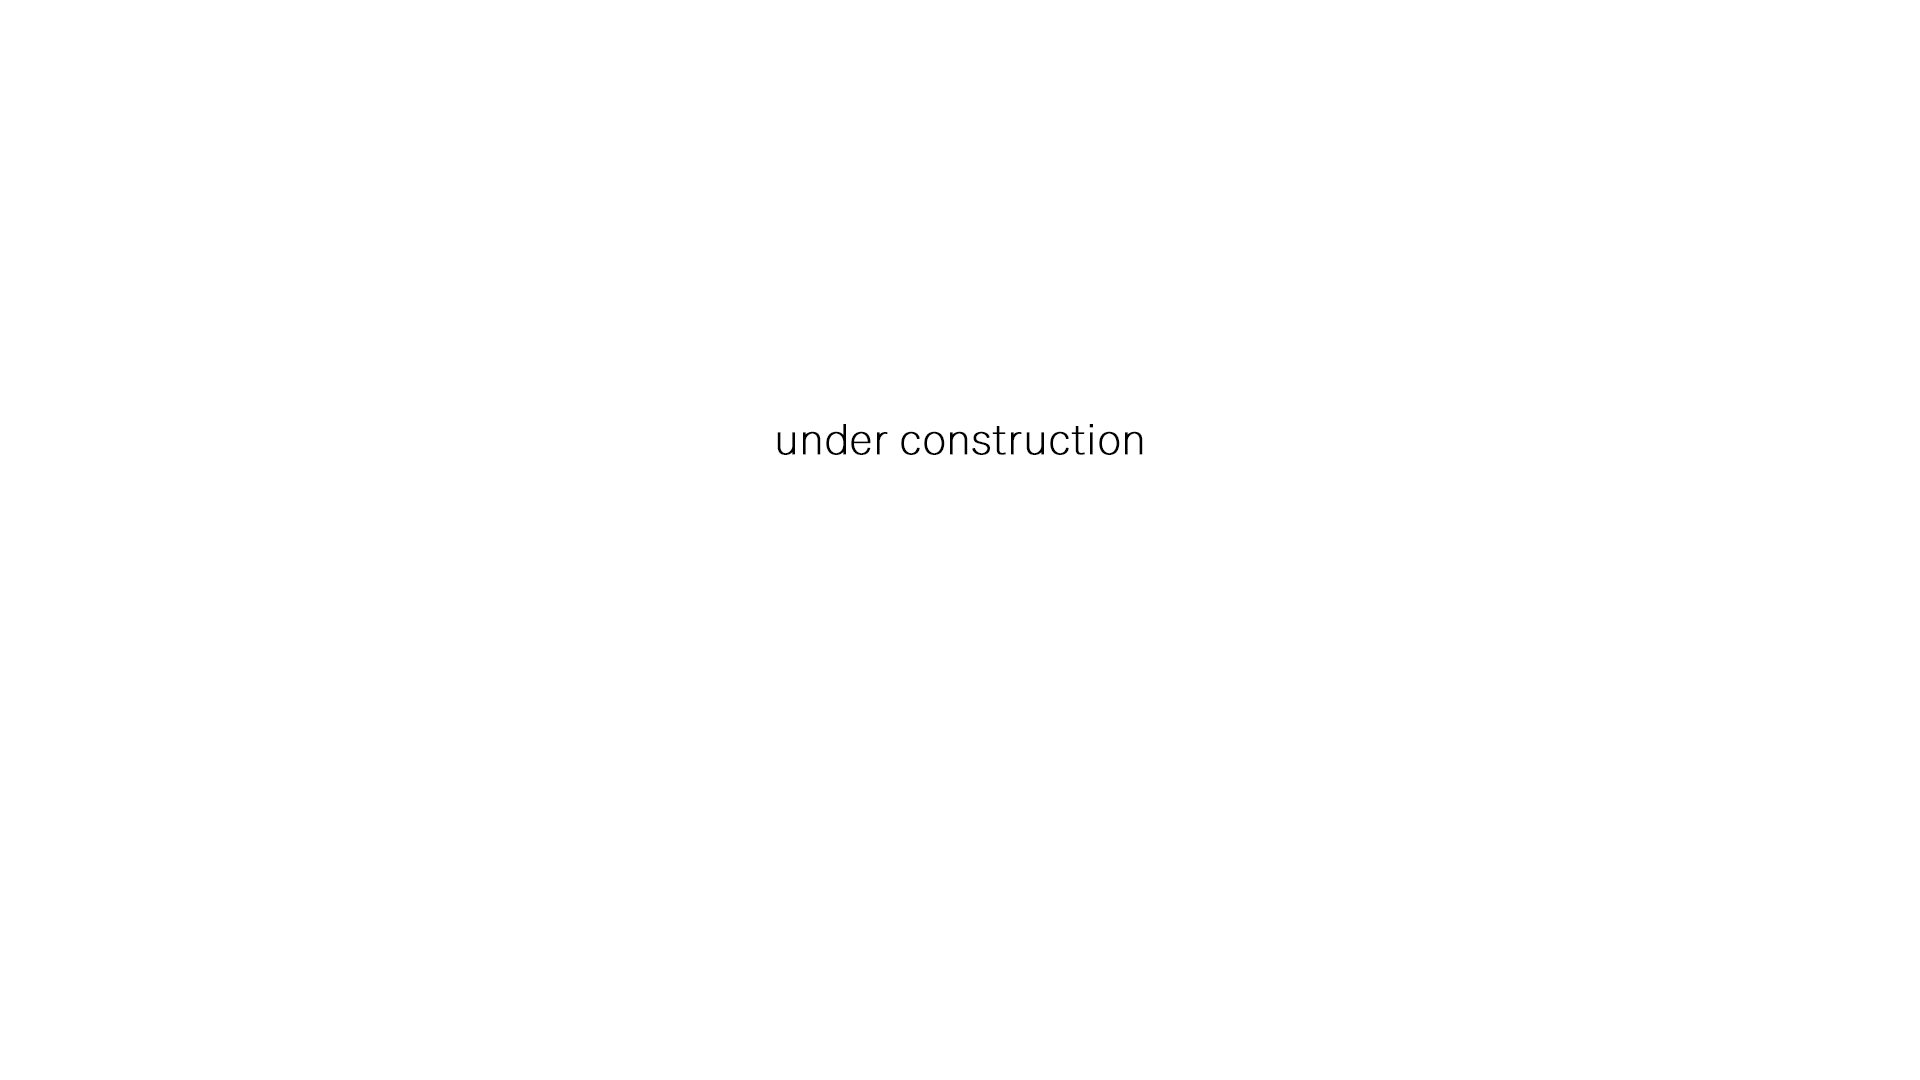 underconstruction_2.PNG